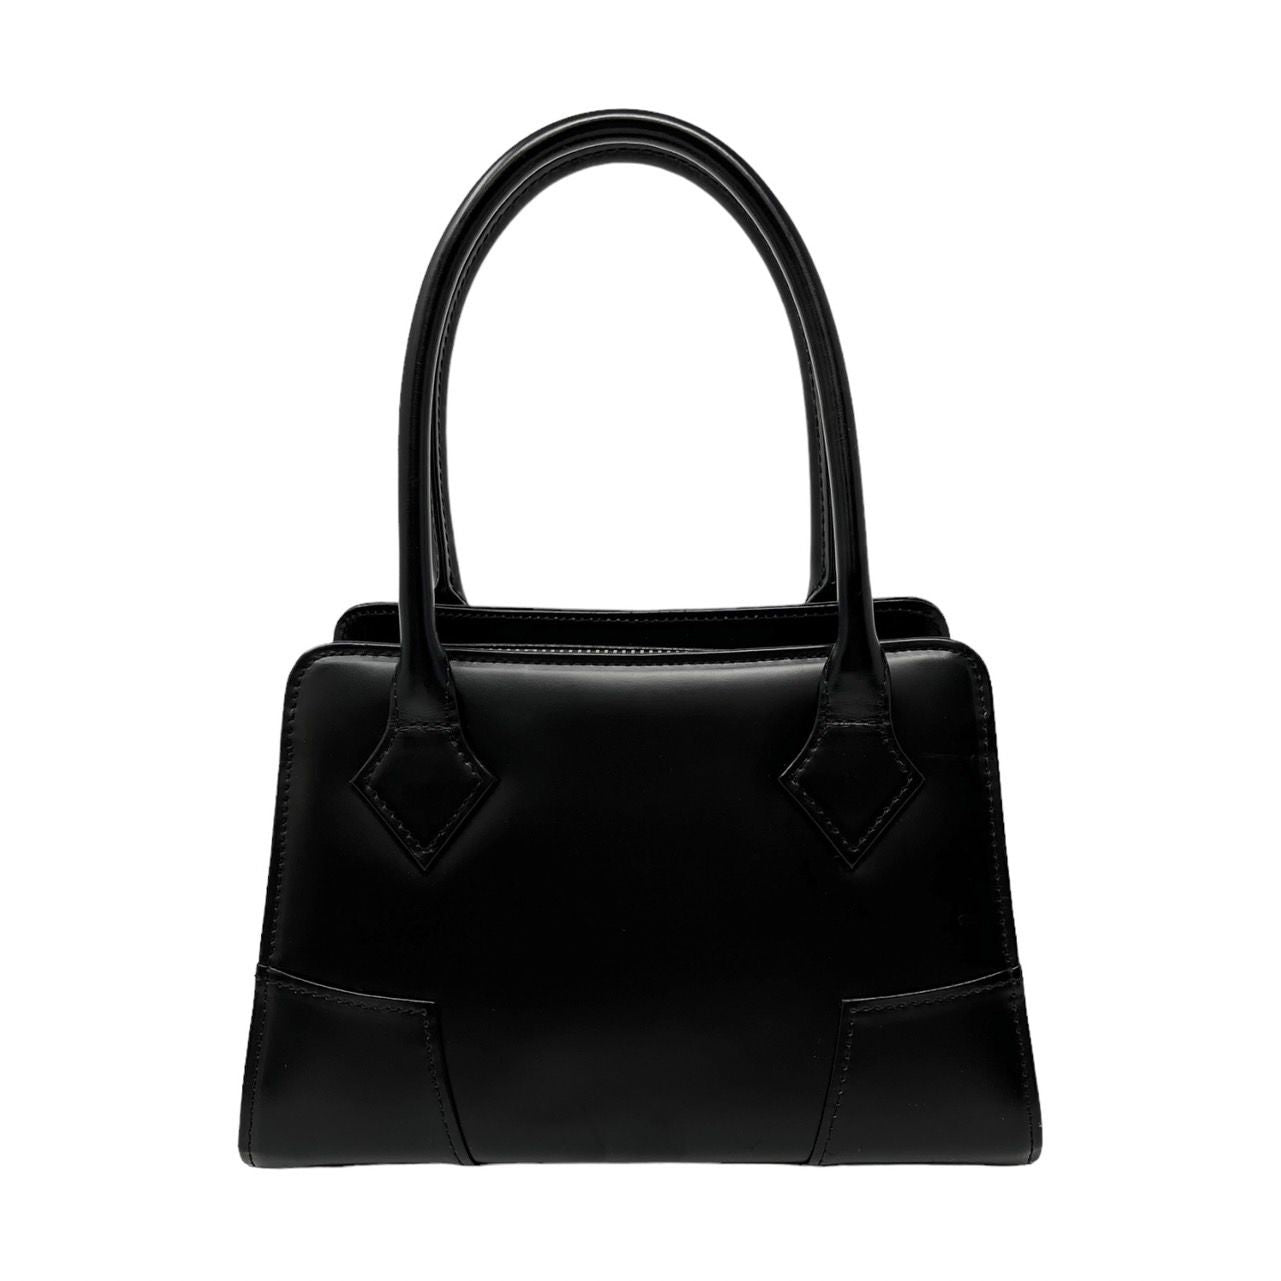 Vivienne Westwood Black Leather Mini Top Handle